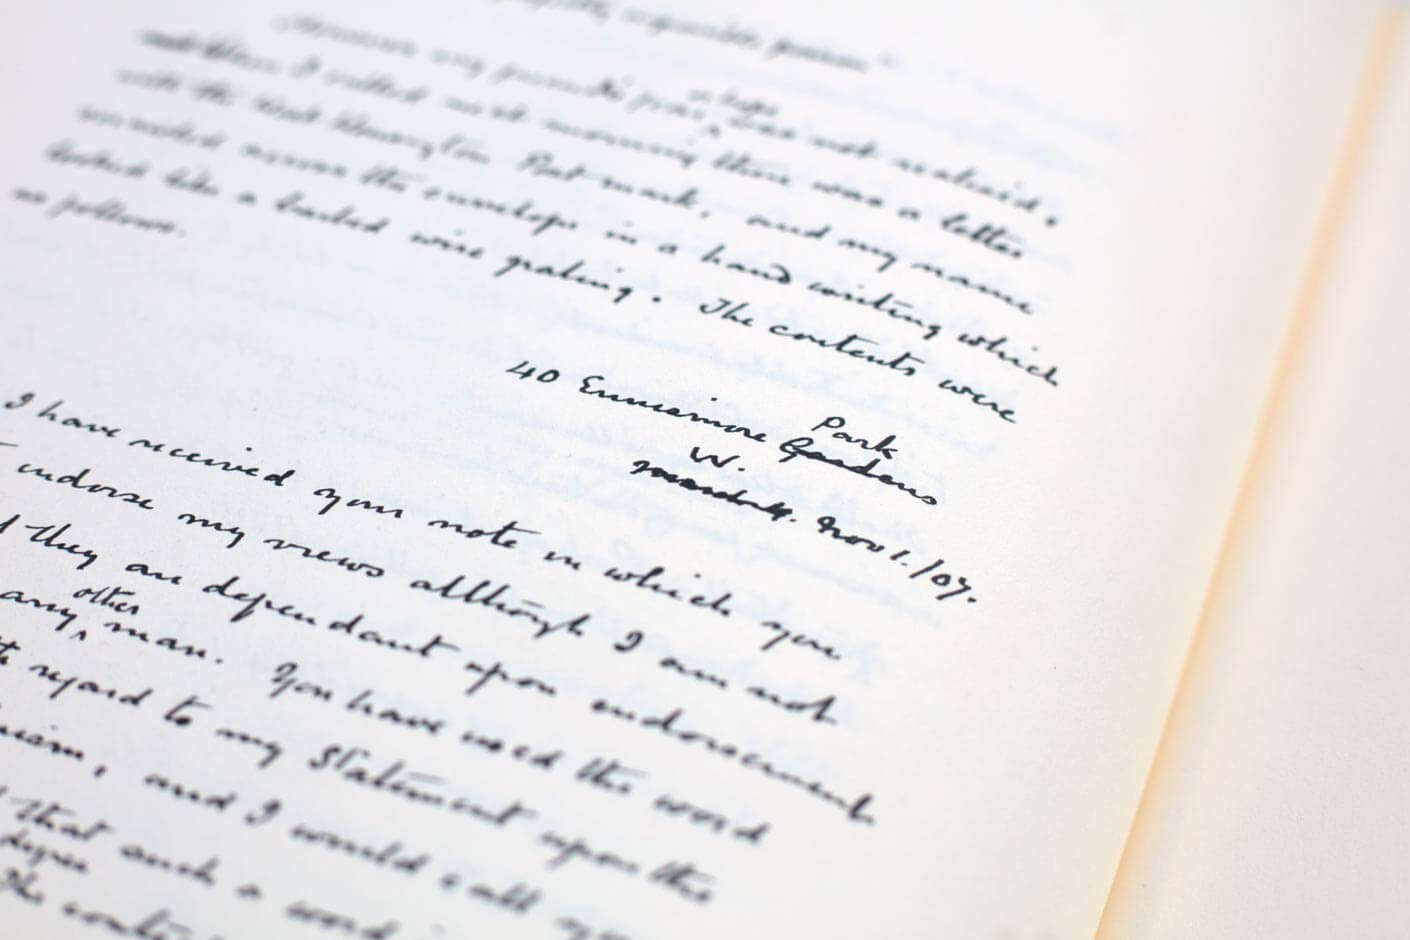 Conan Doyle - manuscript and slipcase